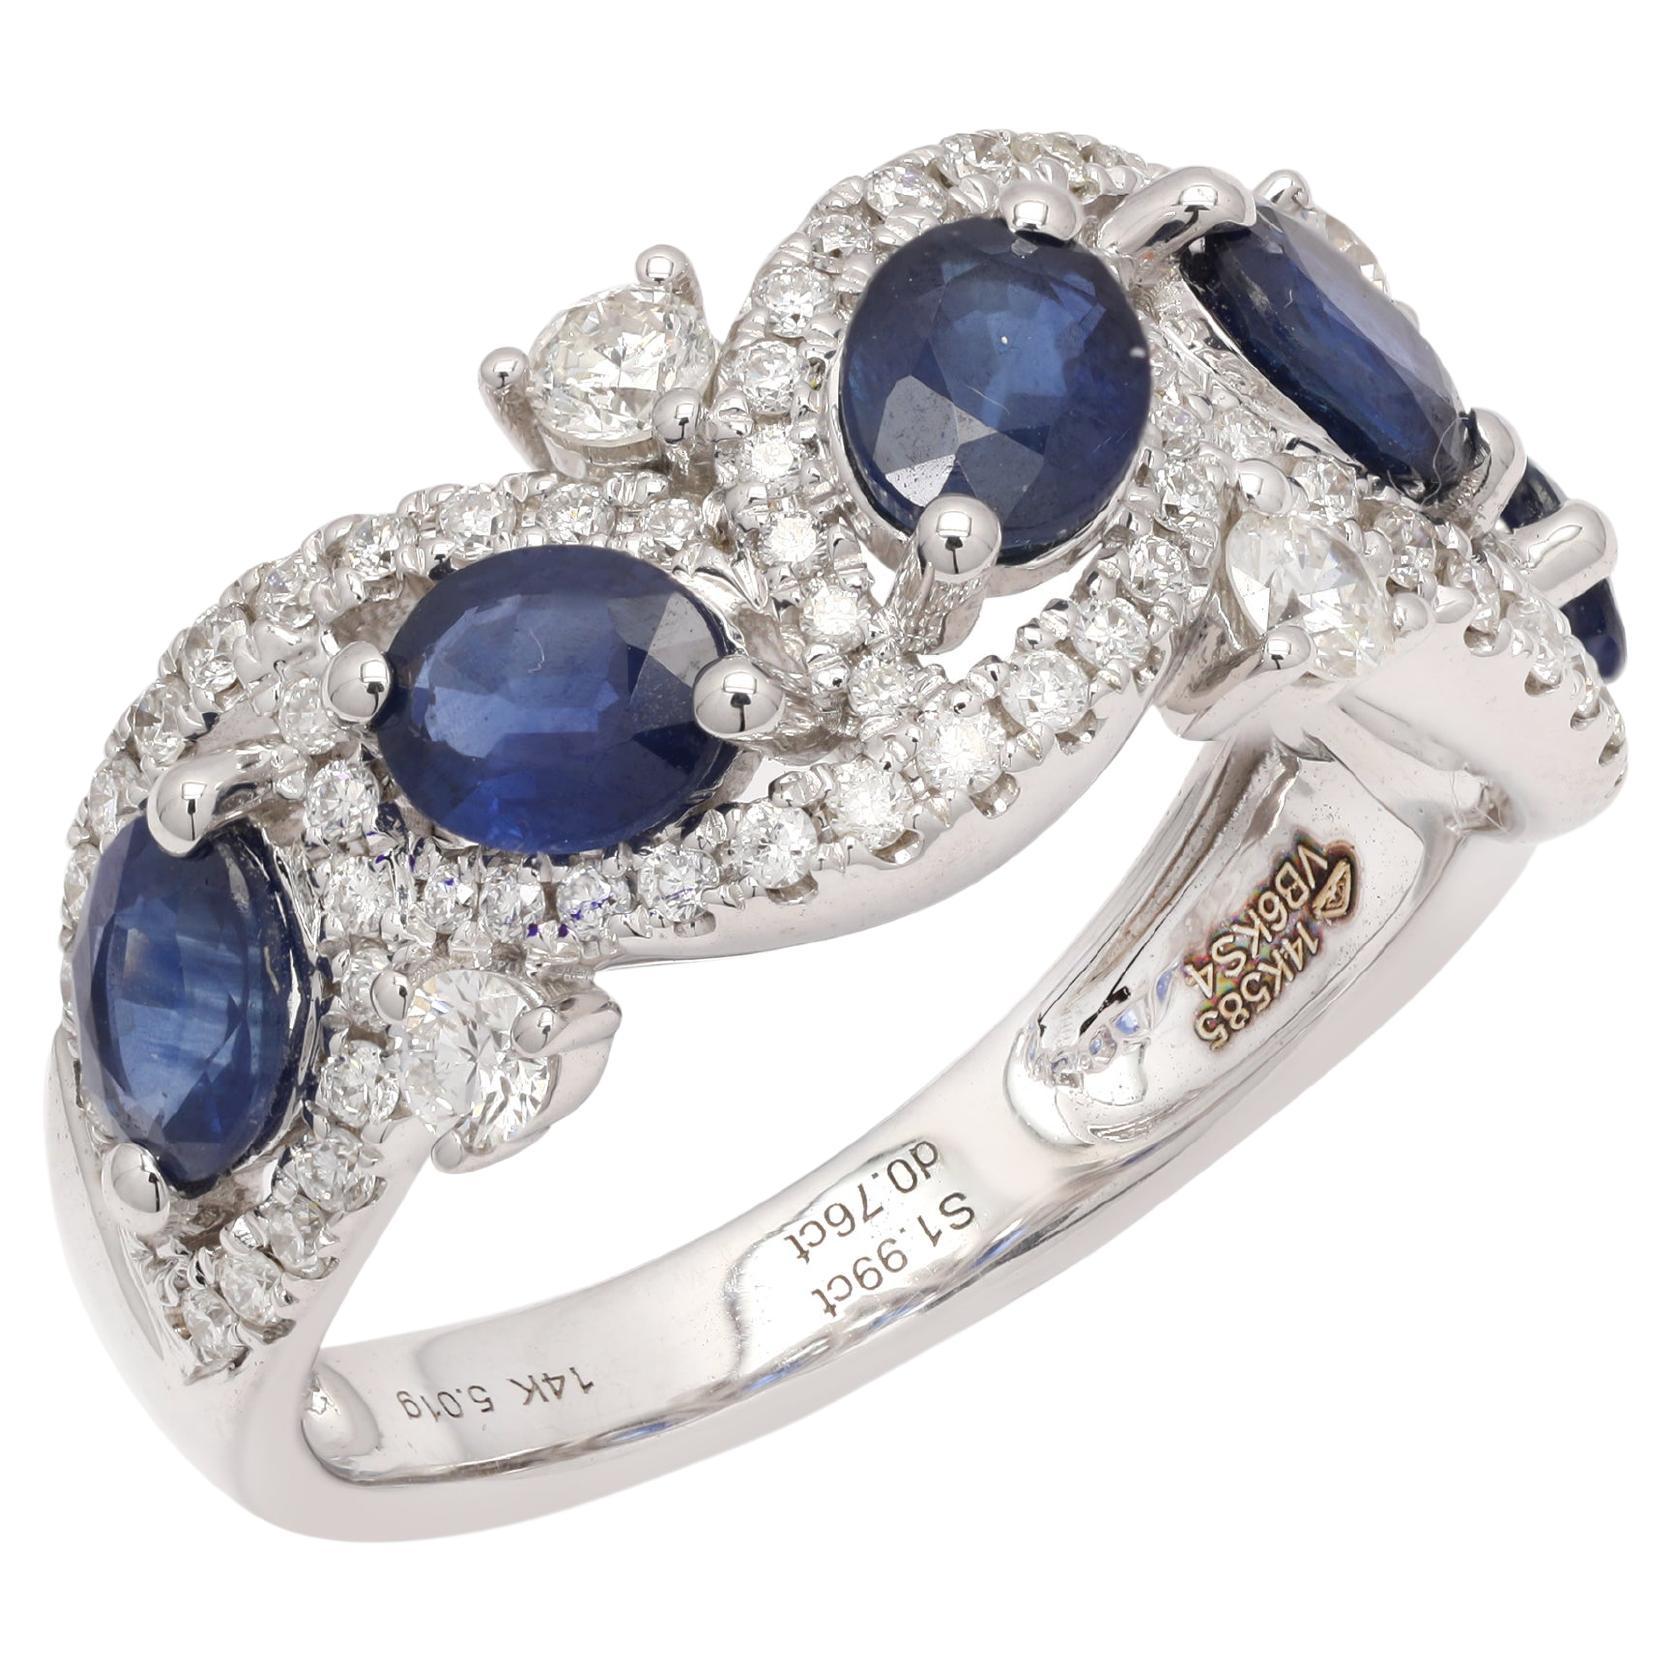 Oval Cut Blue Sapphire Diamond Ring in 14K White Gold 